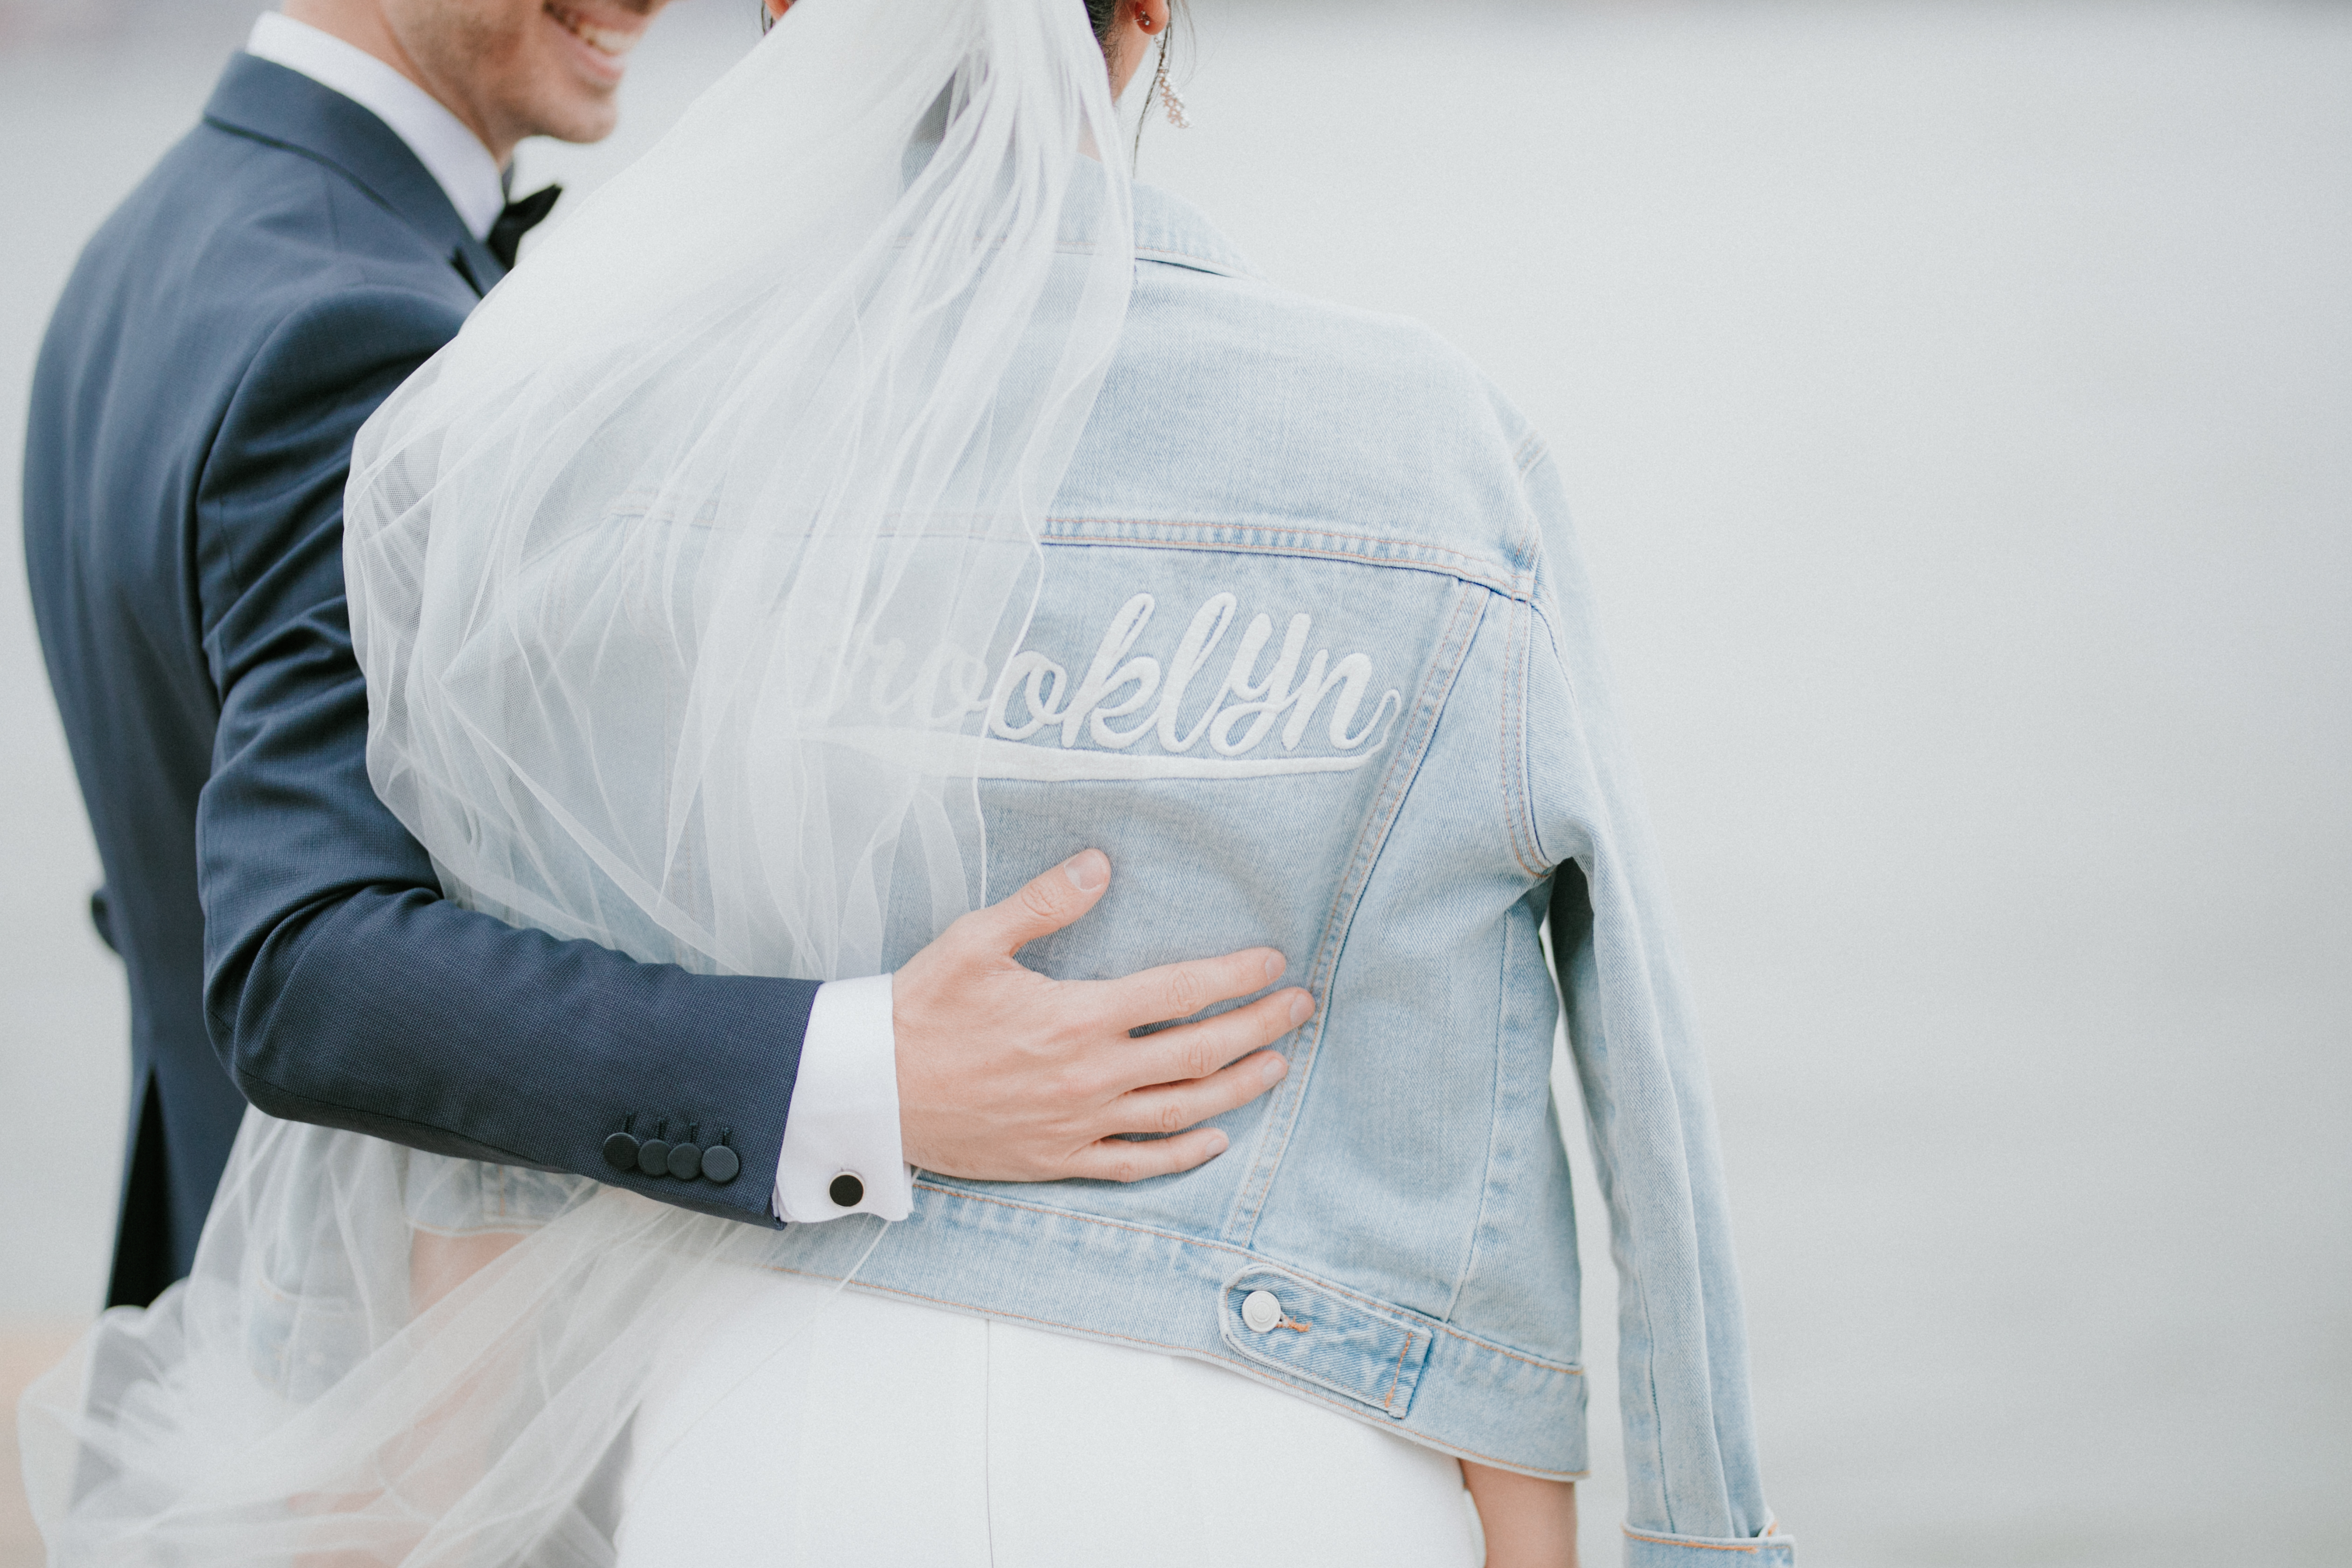 05 06 18 Elodie and Bertrand Wedding 63 - Wedding Video Sweepstakes Winners Wed at The W Loft in Brooklyn